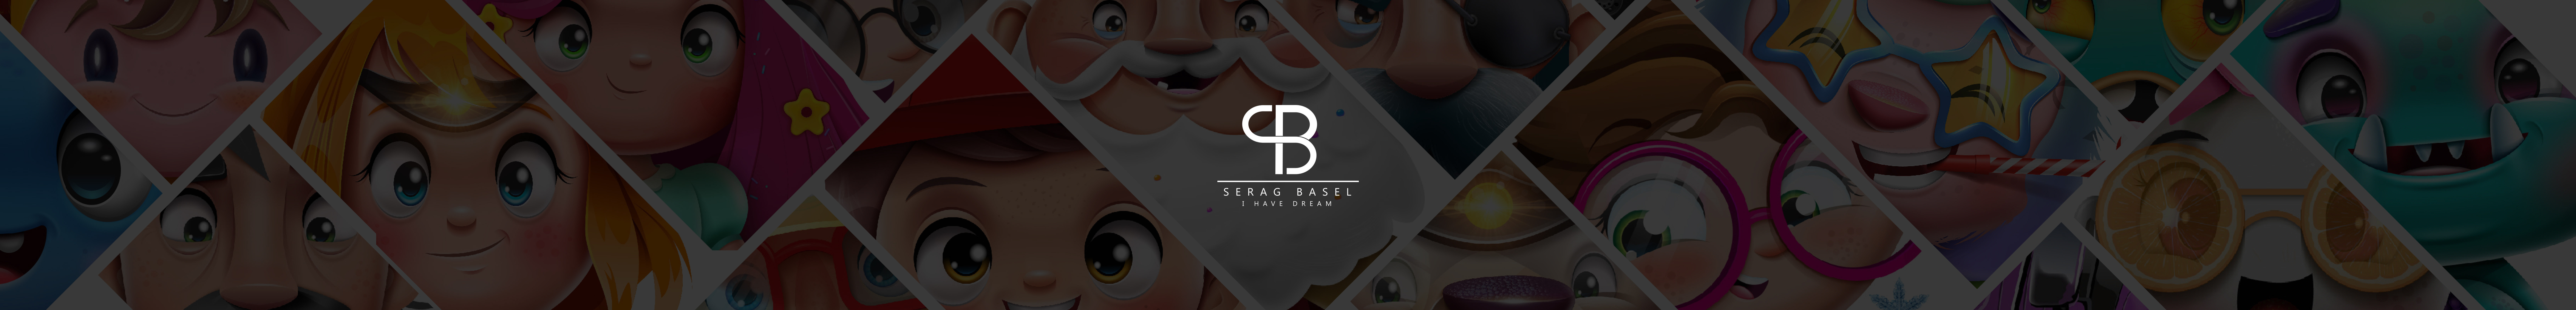 Баннер профиля serag basel™